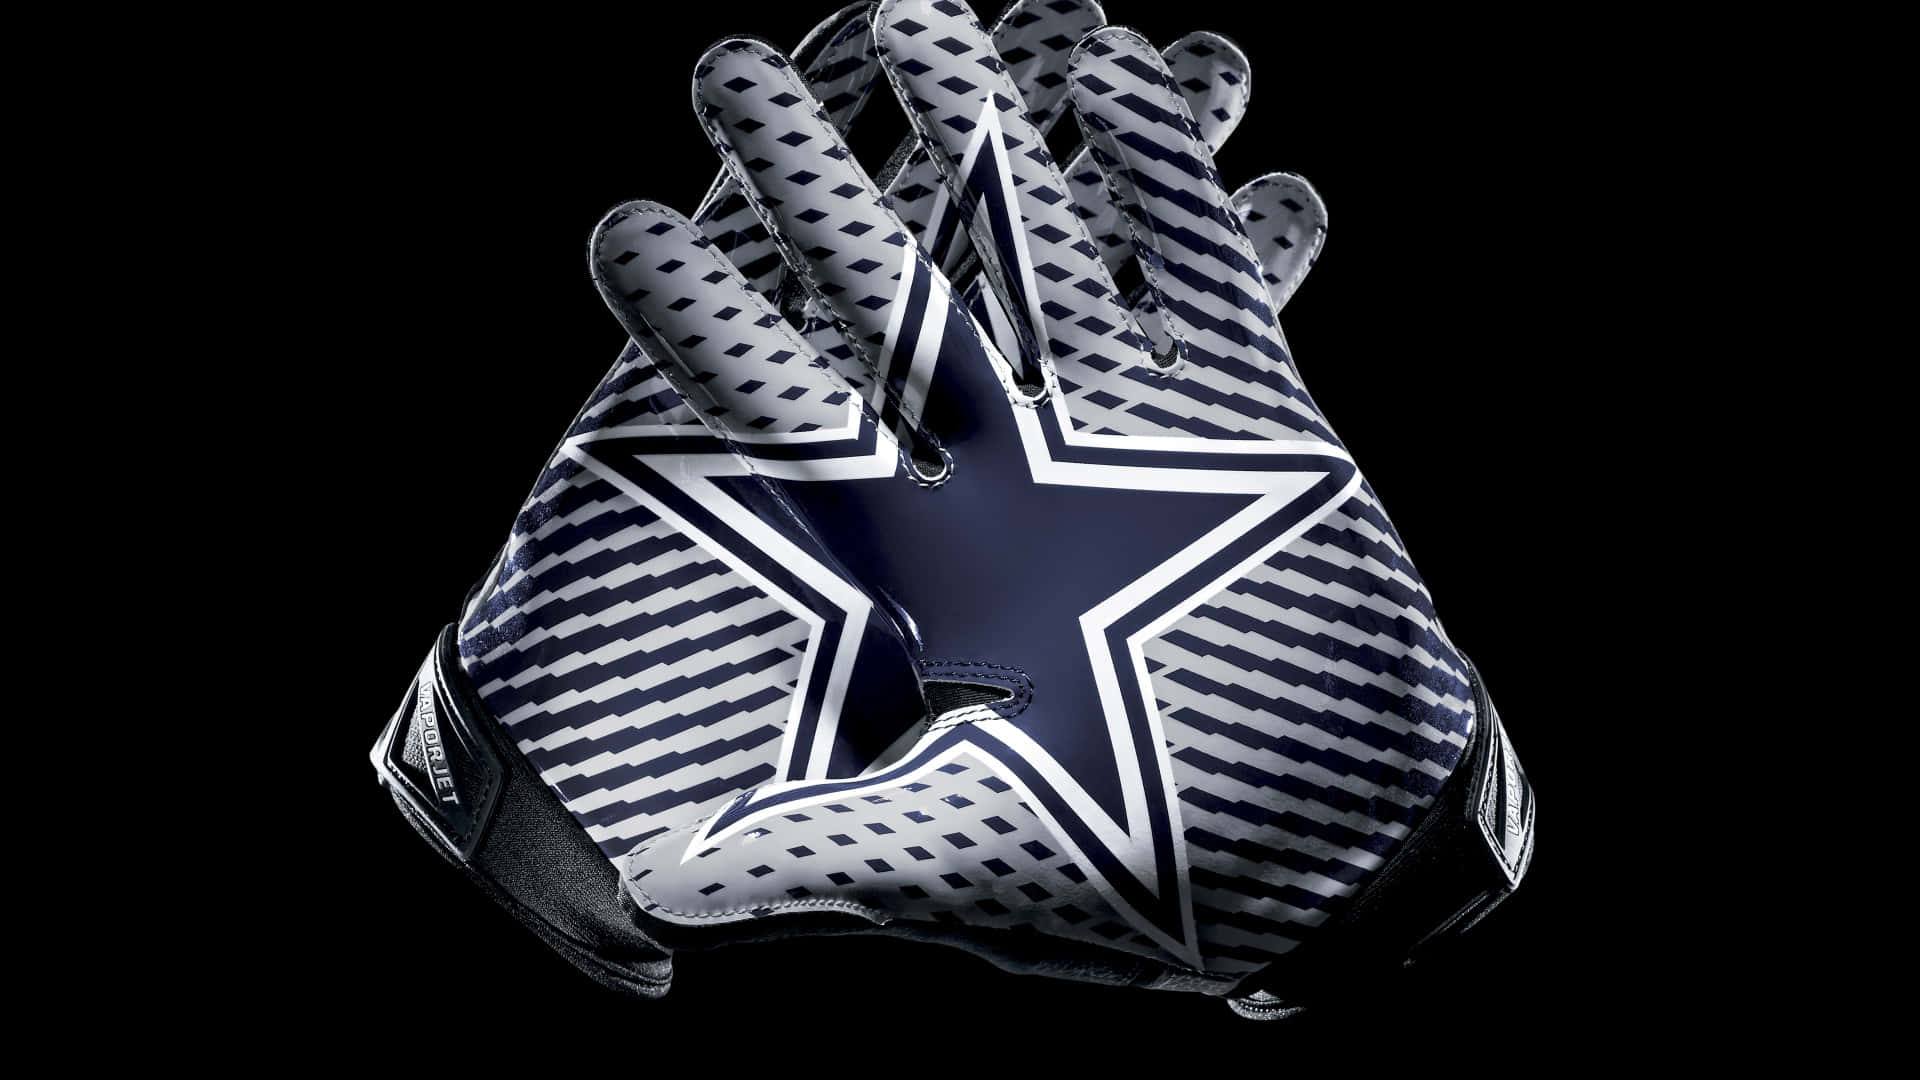 Dallas Cowboys Football Gloves Wallpaper